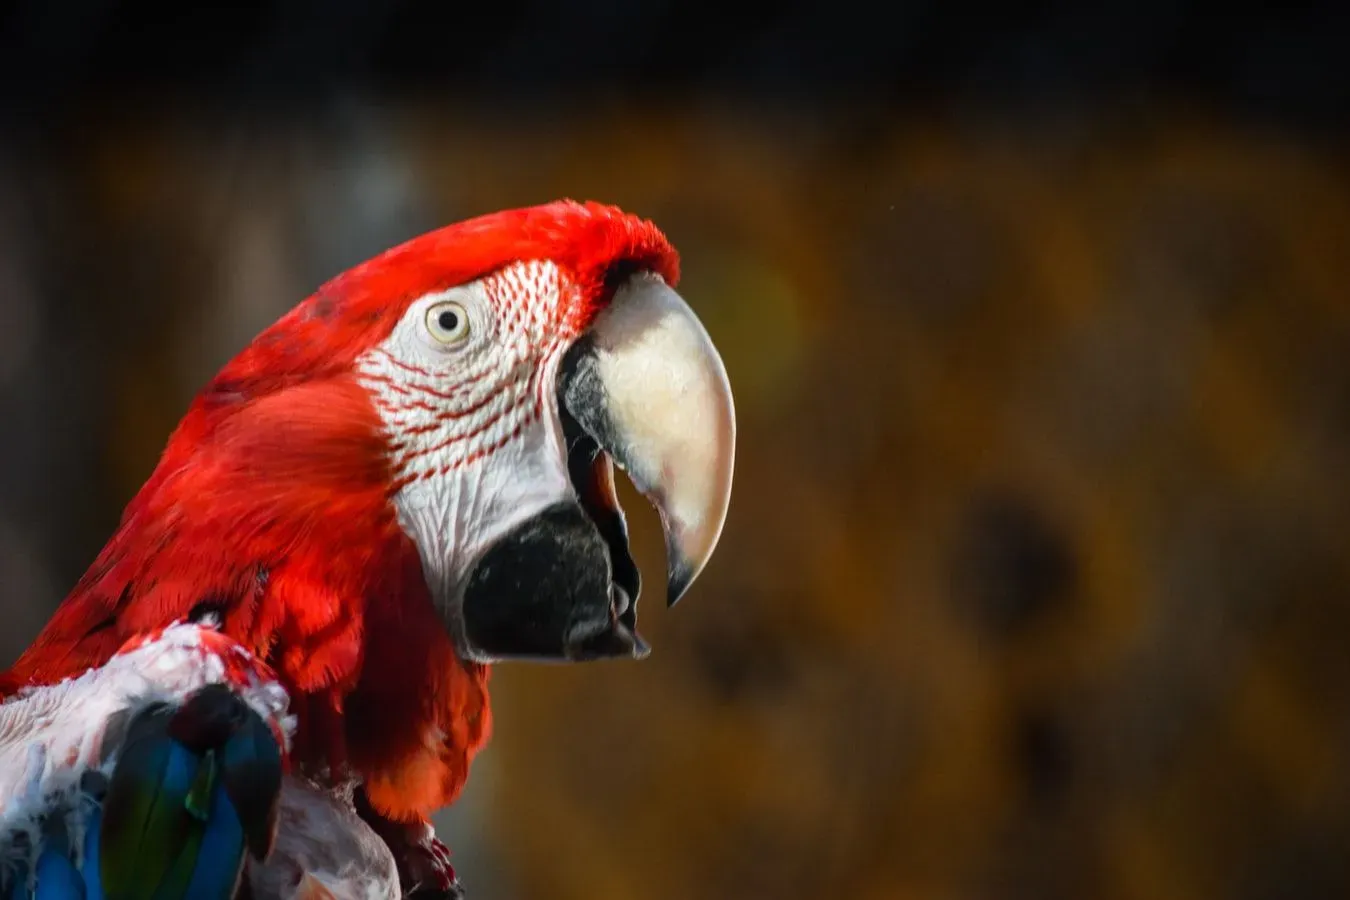 Scarlet macaw parrot is an endangered bird species.